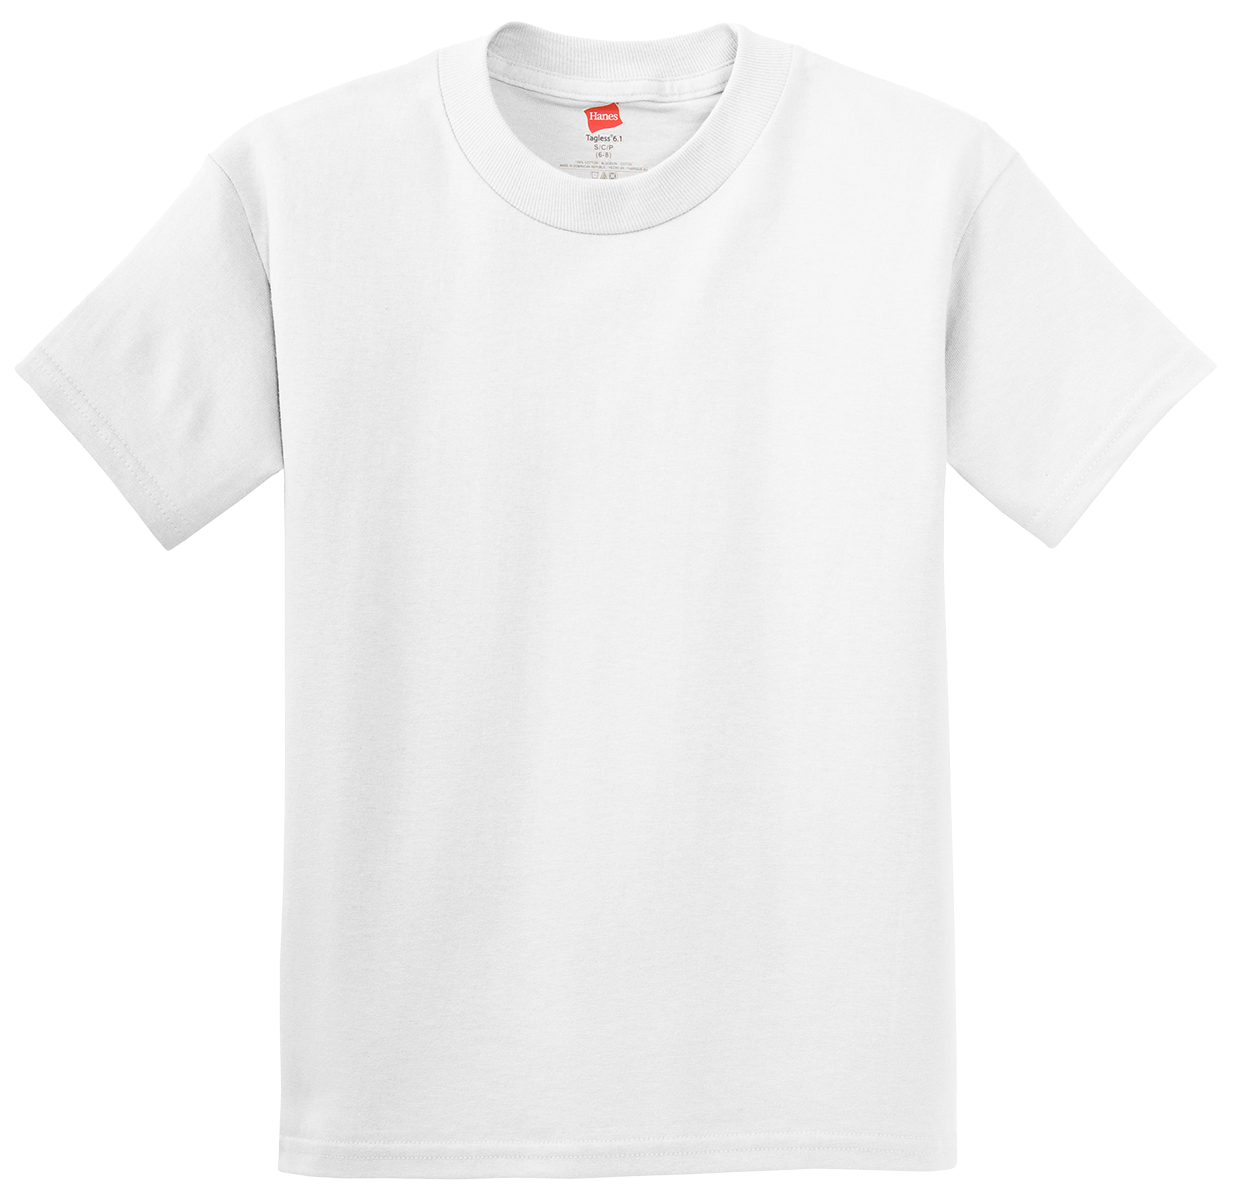 Baxboy señores cuello redondo slim fit camiseta polo Print t-shirt negro//blanco//rojo jp-1005